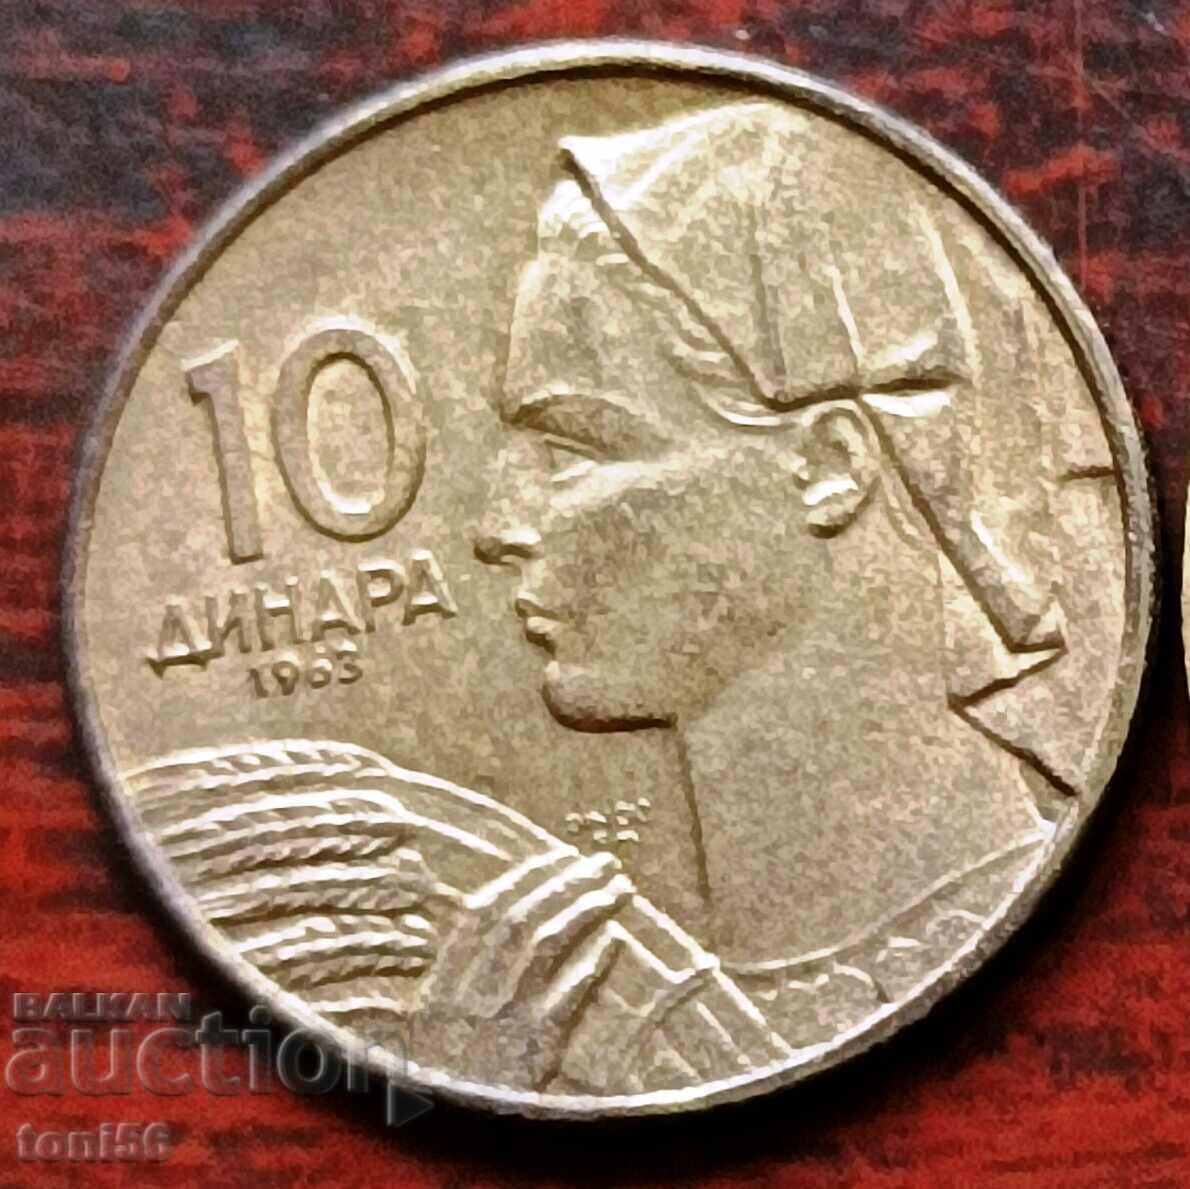 Iugoslavia 10 dinari 1963 calitate